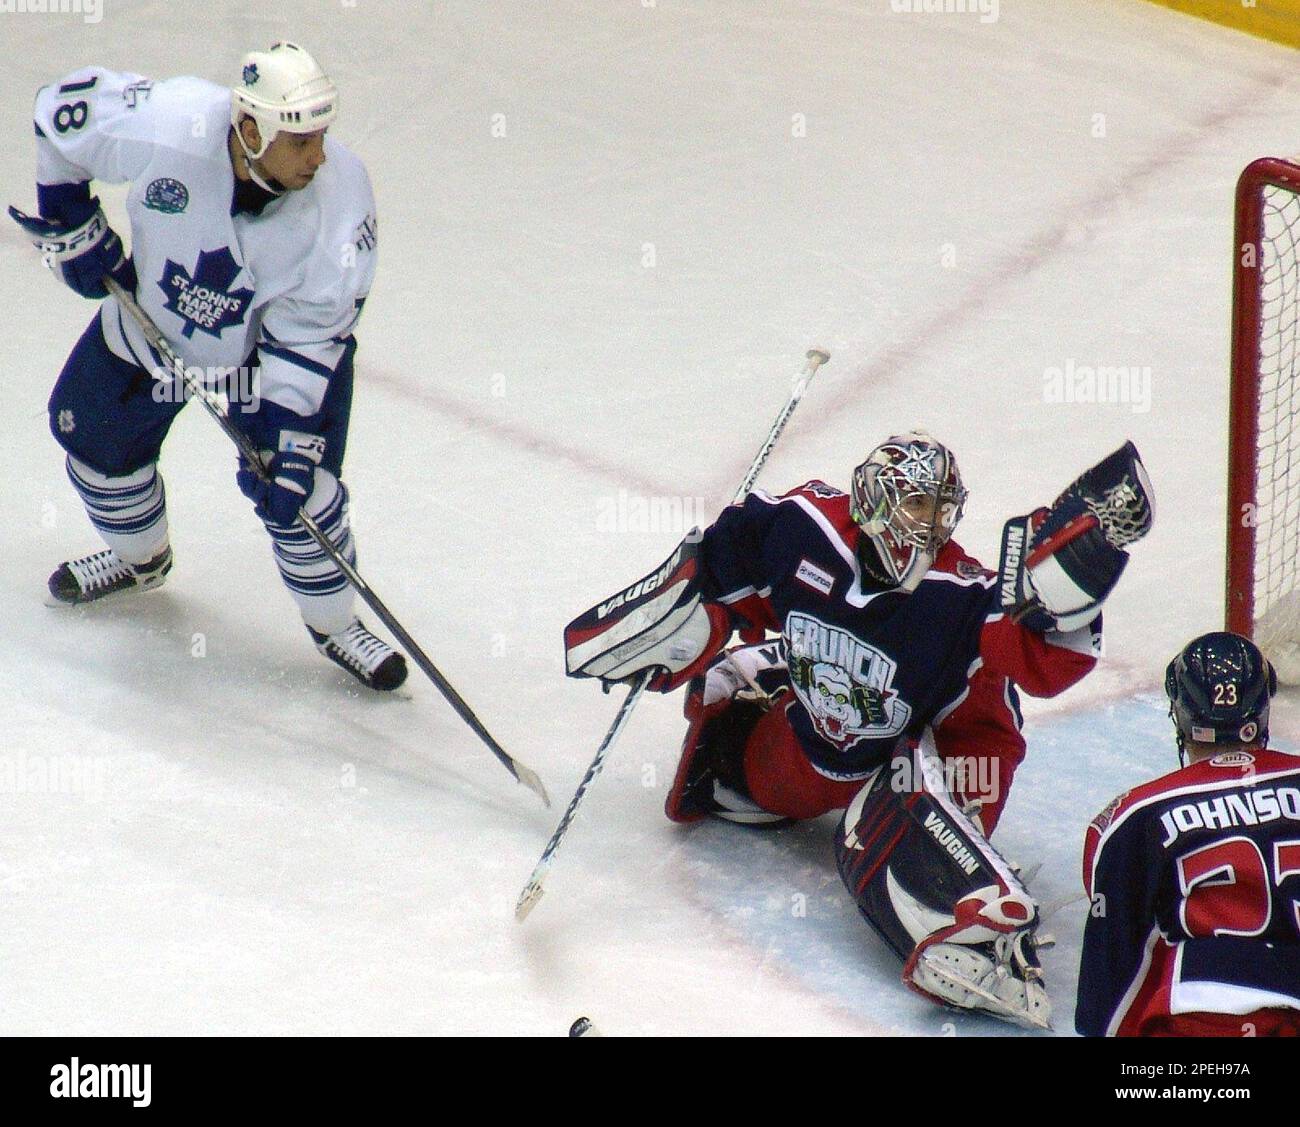 St. John's Maple Leafs 2004 - 2005 Game Worn Jersey